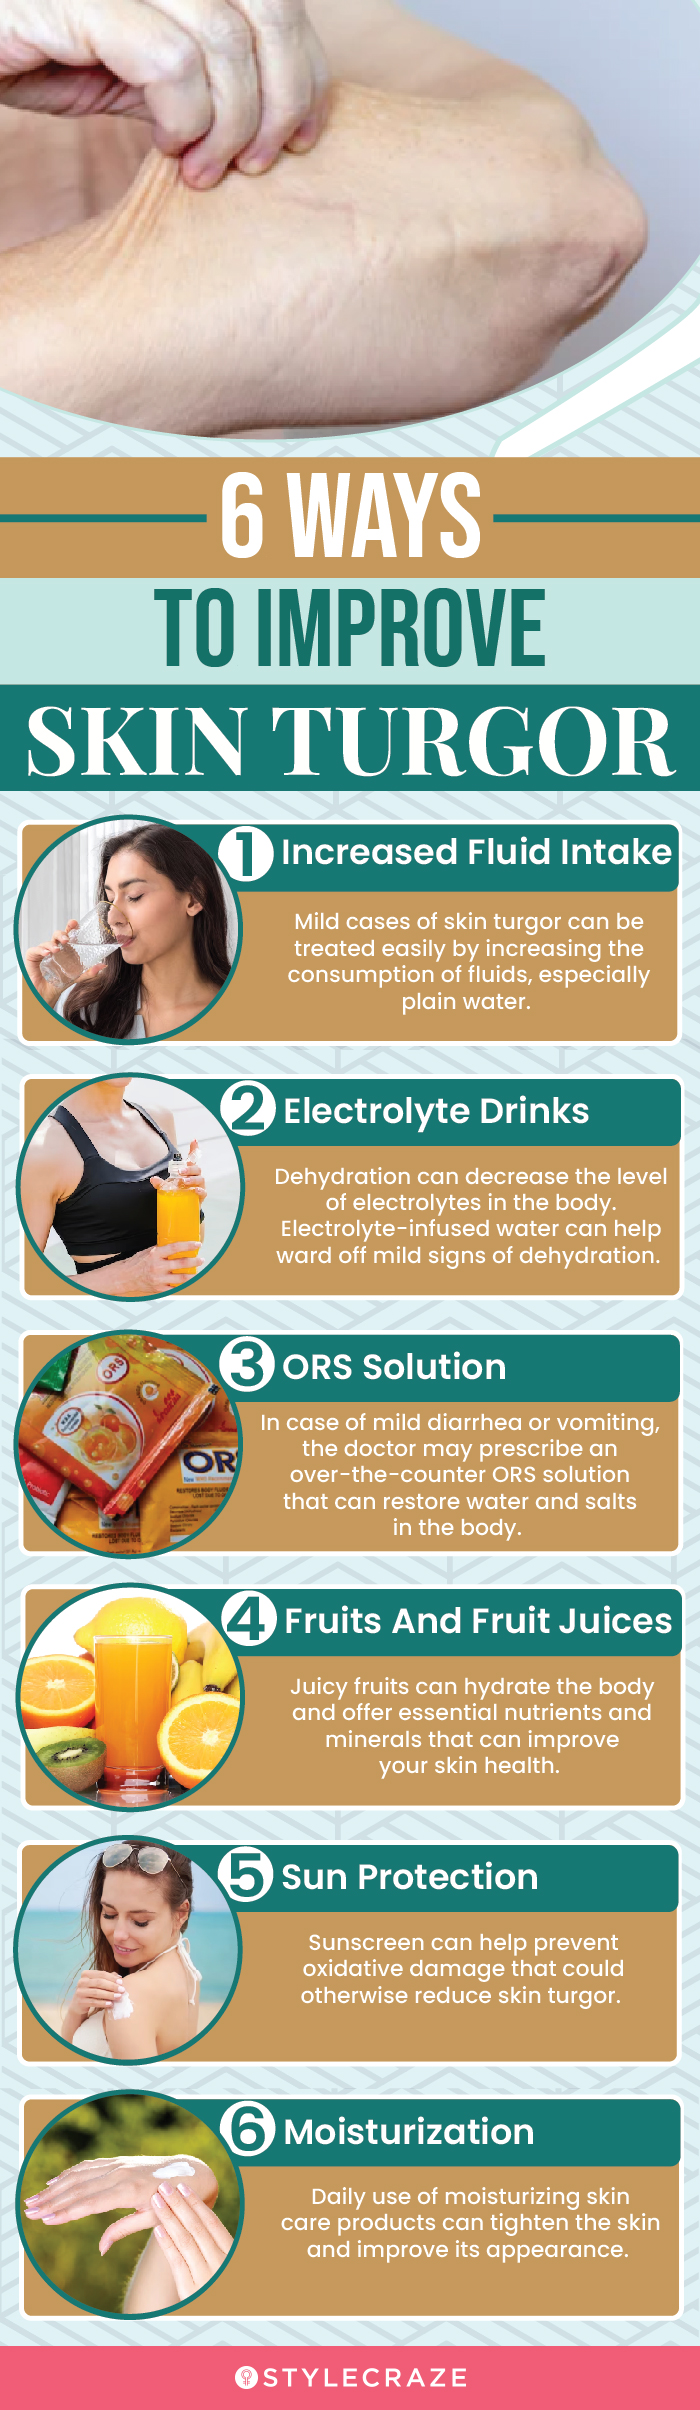 6 ways to improve skin turgor (infographic)